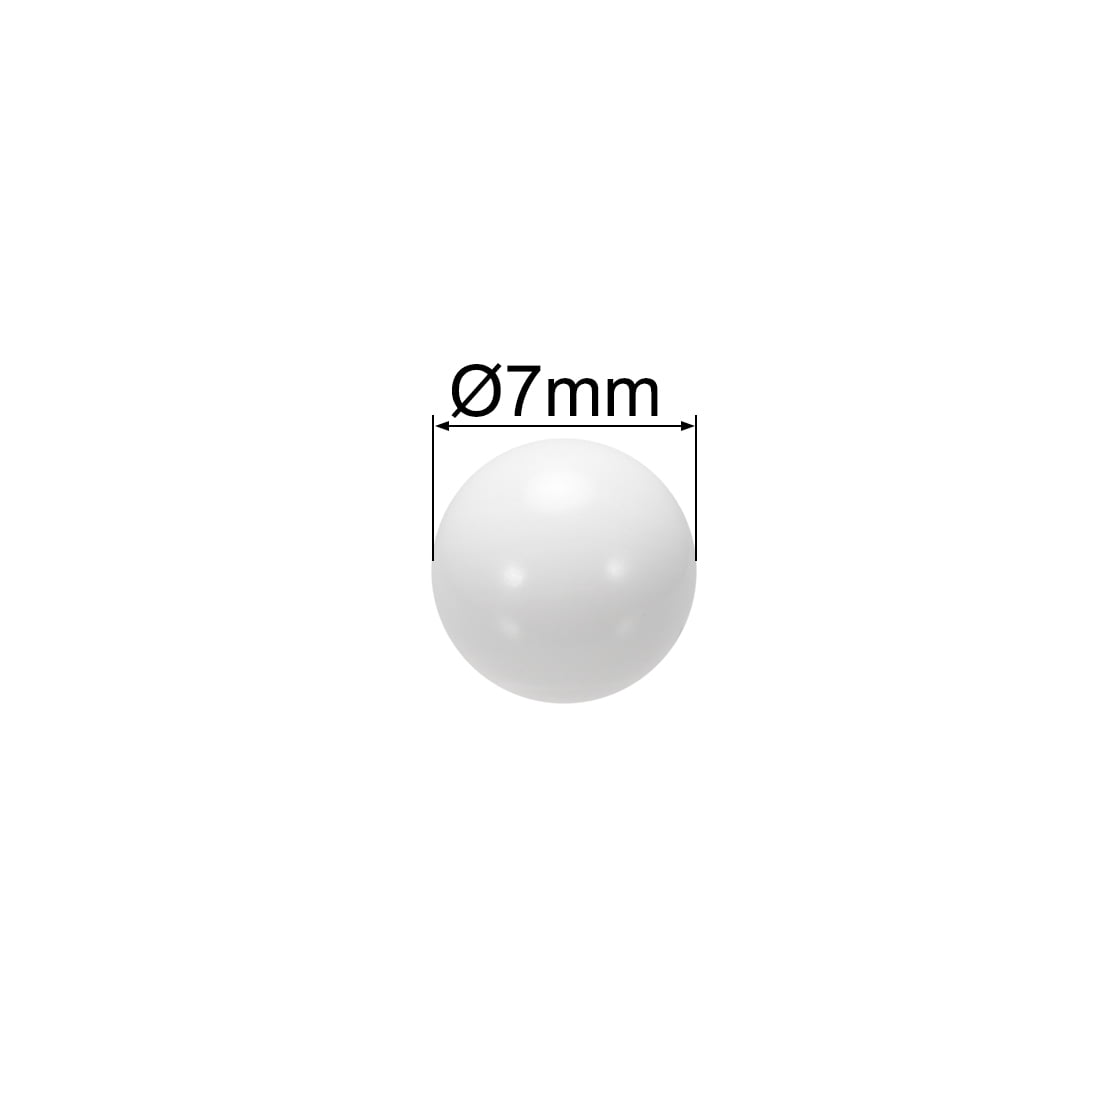 Plastic Bearing Ball 10pcs sourcing map 7mm POM Coin Ring Making Balls